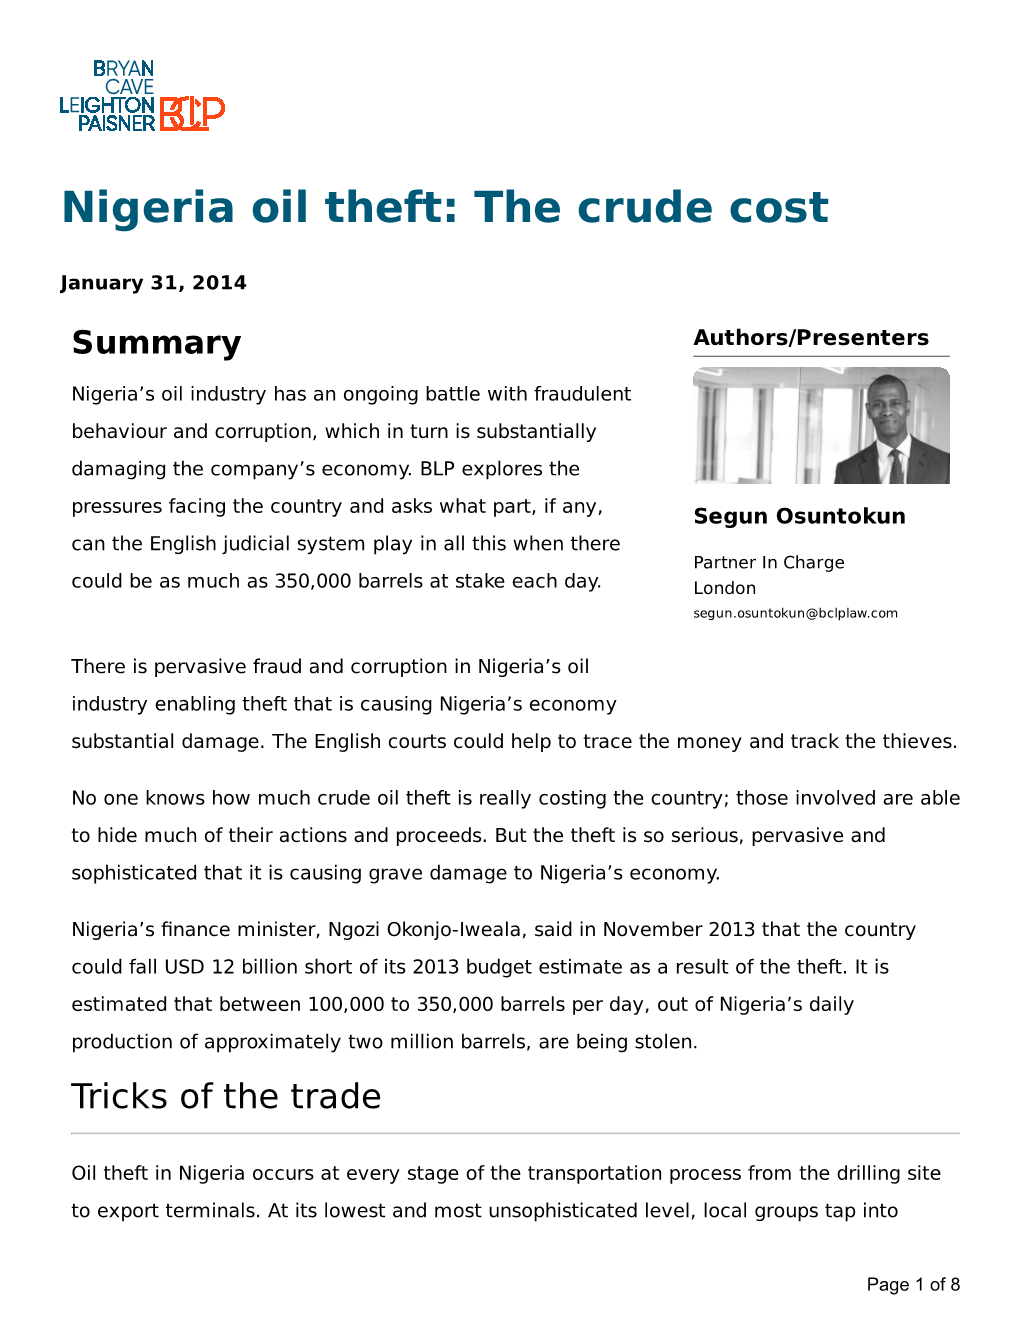 Nigeria Oil Theft: the Crude Cost